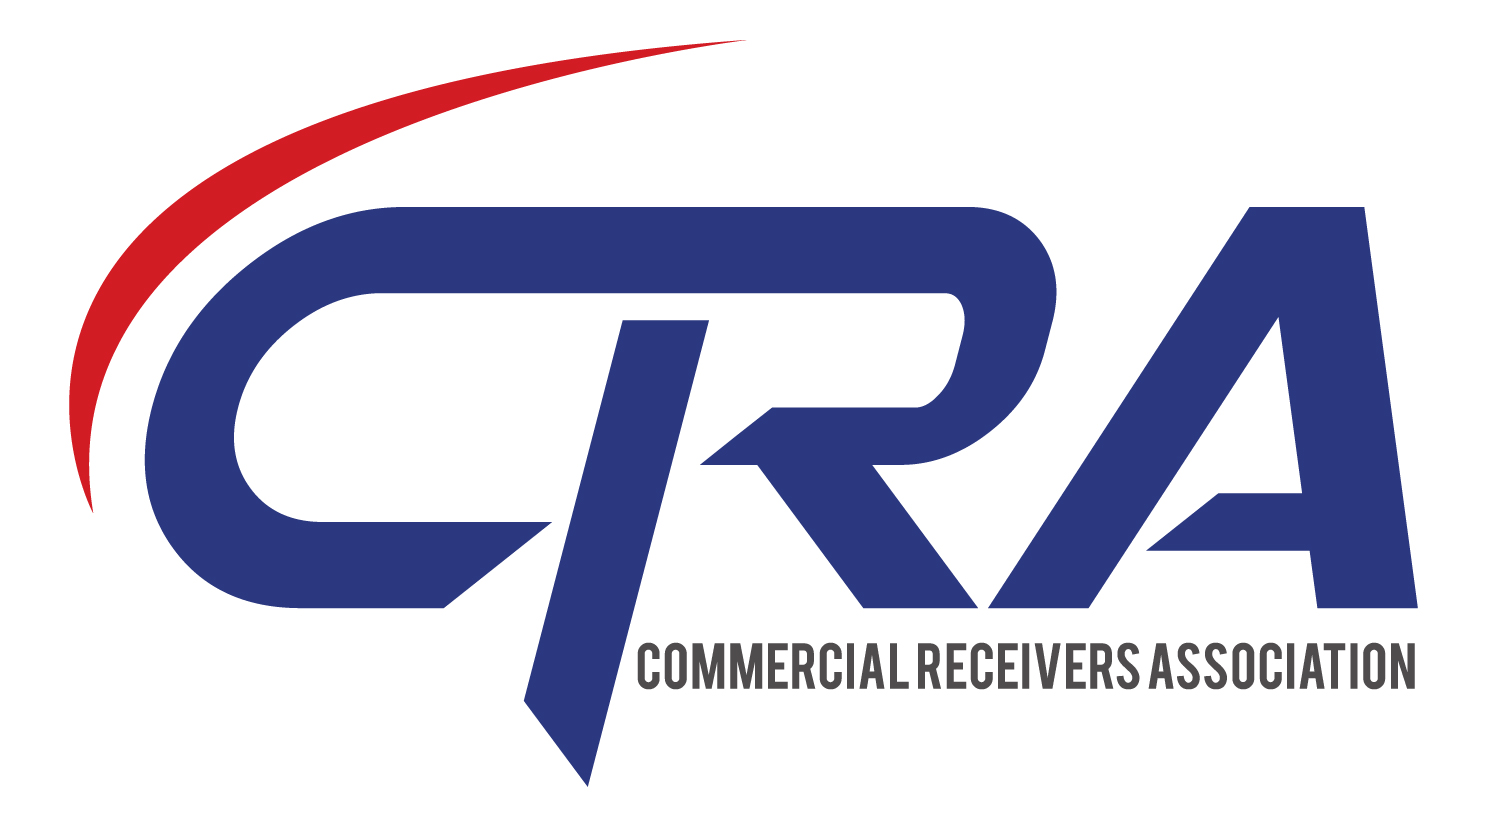 Commercial Receivers Association